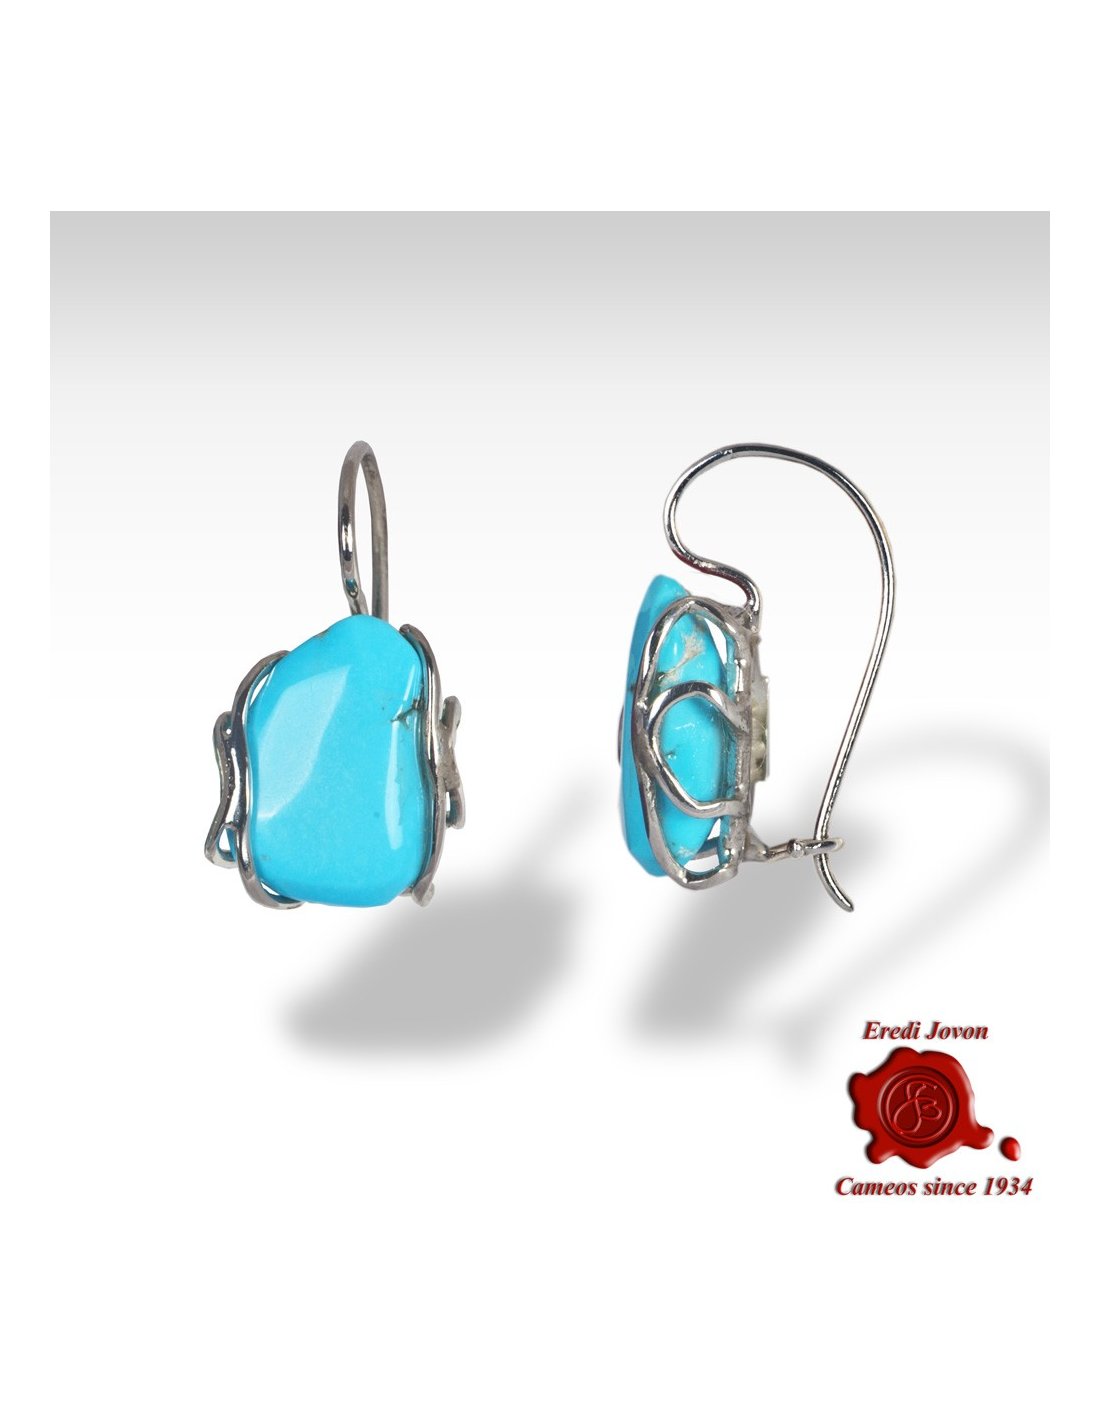 Gemstone Jewelry Turquoise Gemstone Earrings Handmade Jewelry Birthstone Turquoise Earrings Stone Earrings Turquoise Stone Earrings